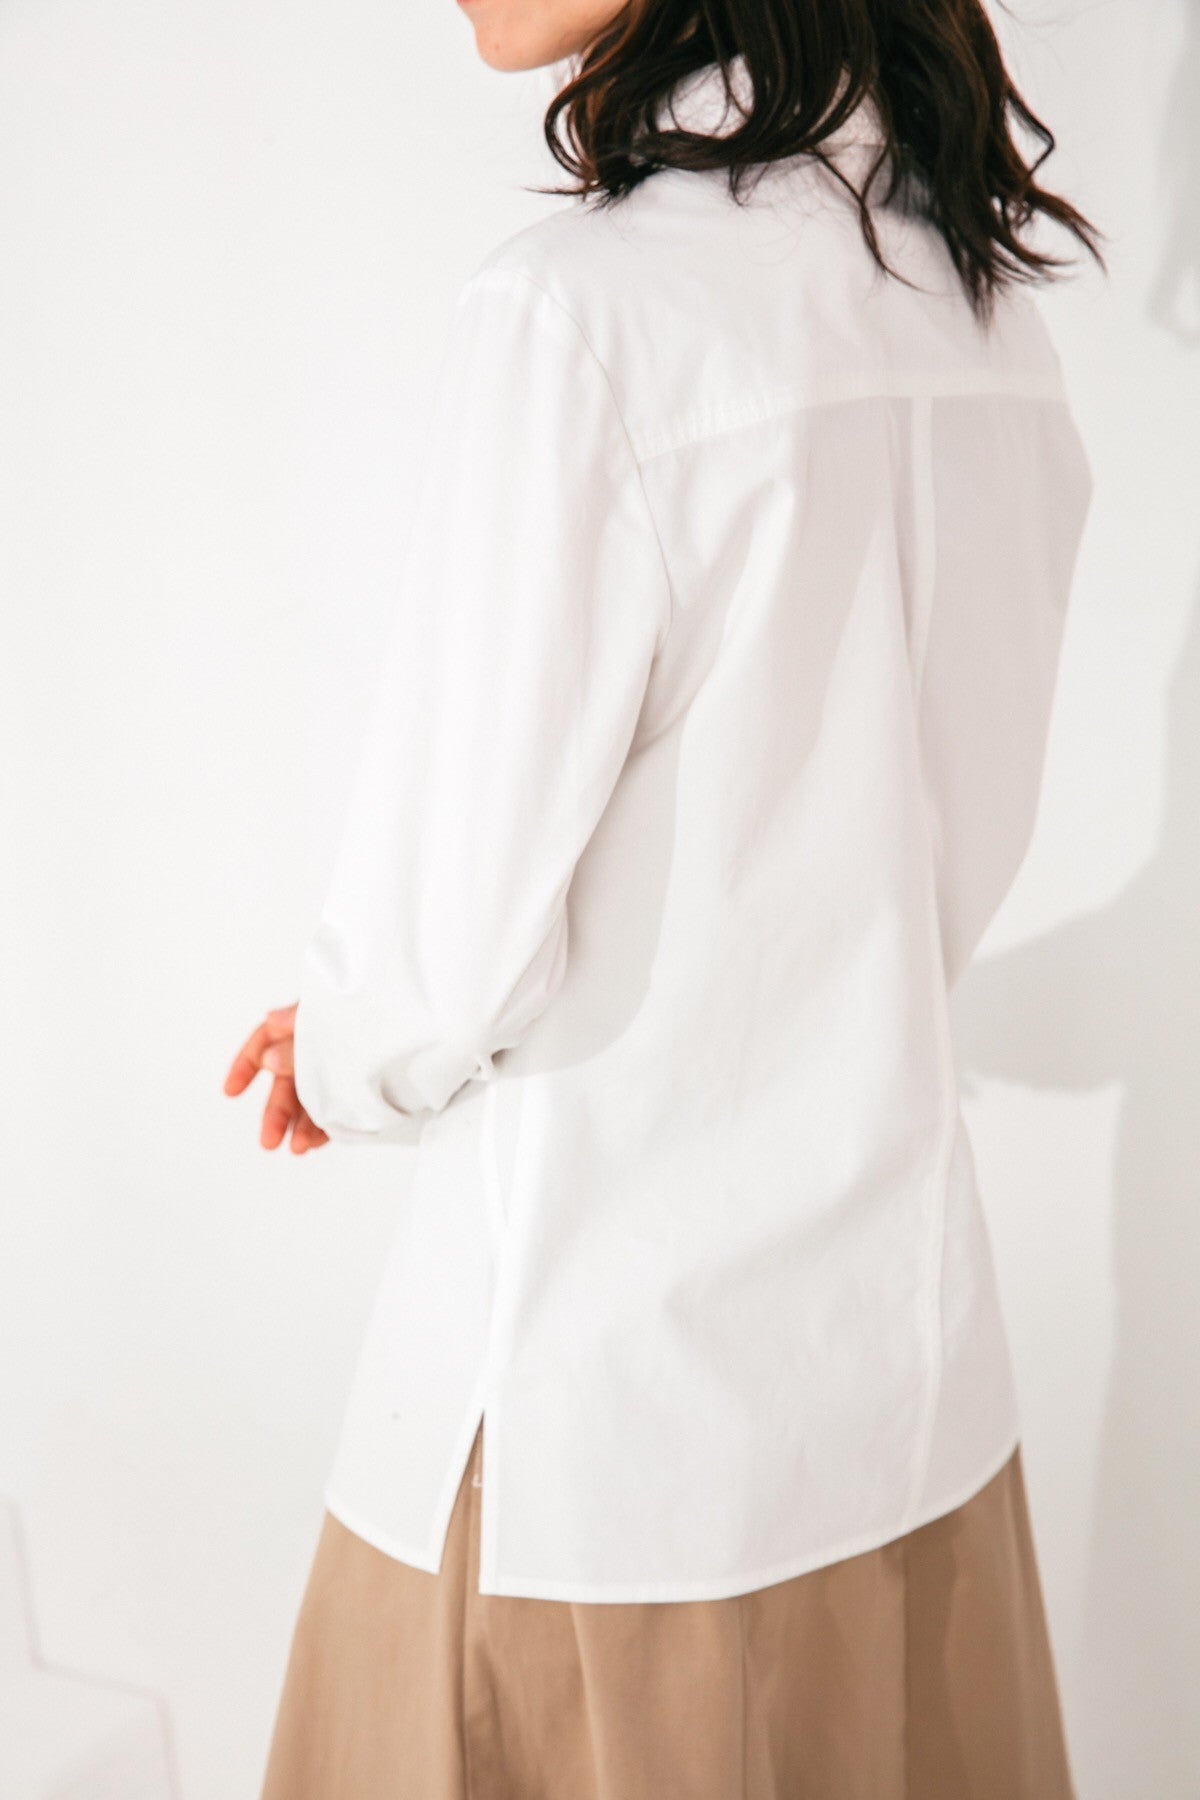 SKYE San Francisco SF shop ethical modern minimalist quality women clothing fashion Audrey Shirt white